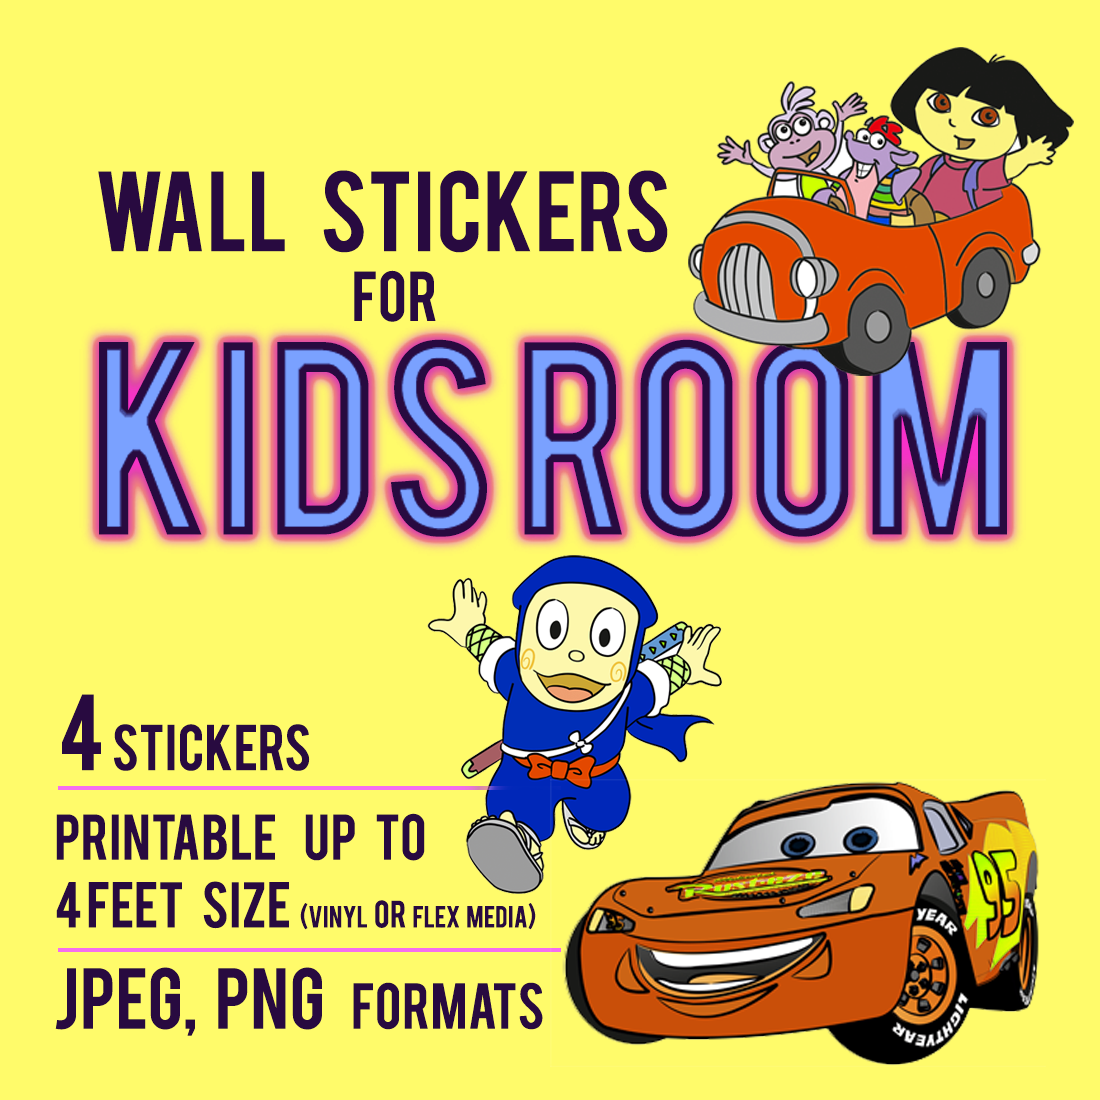 Kids Room Sticker designs preview image.